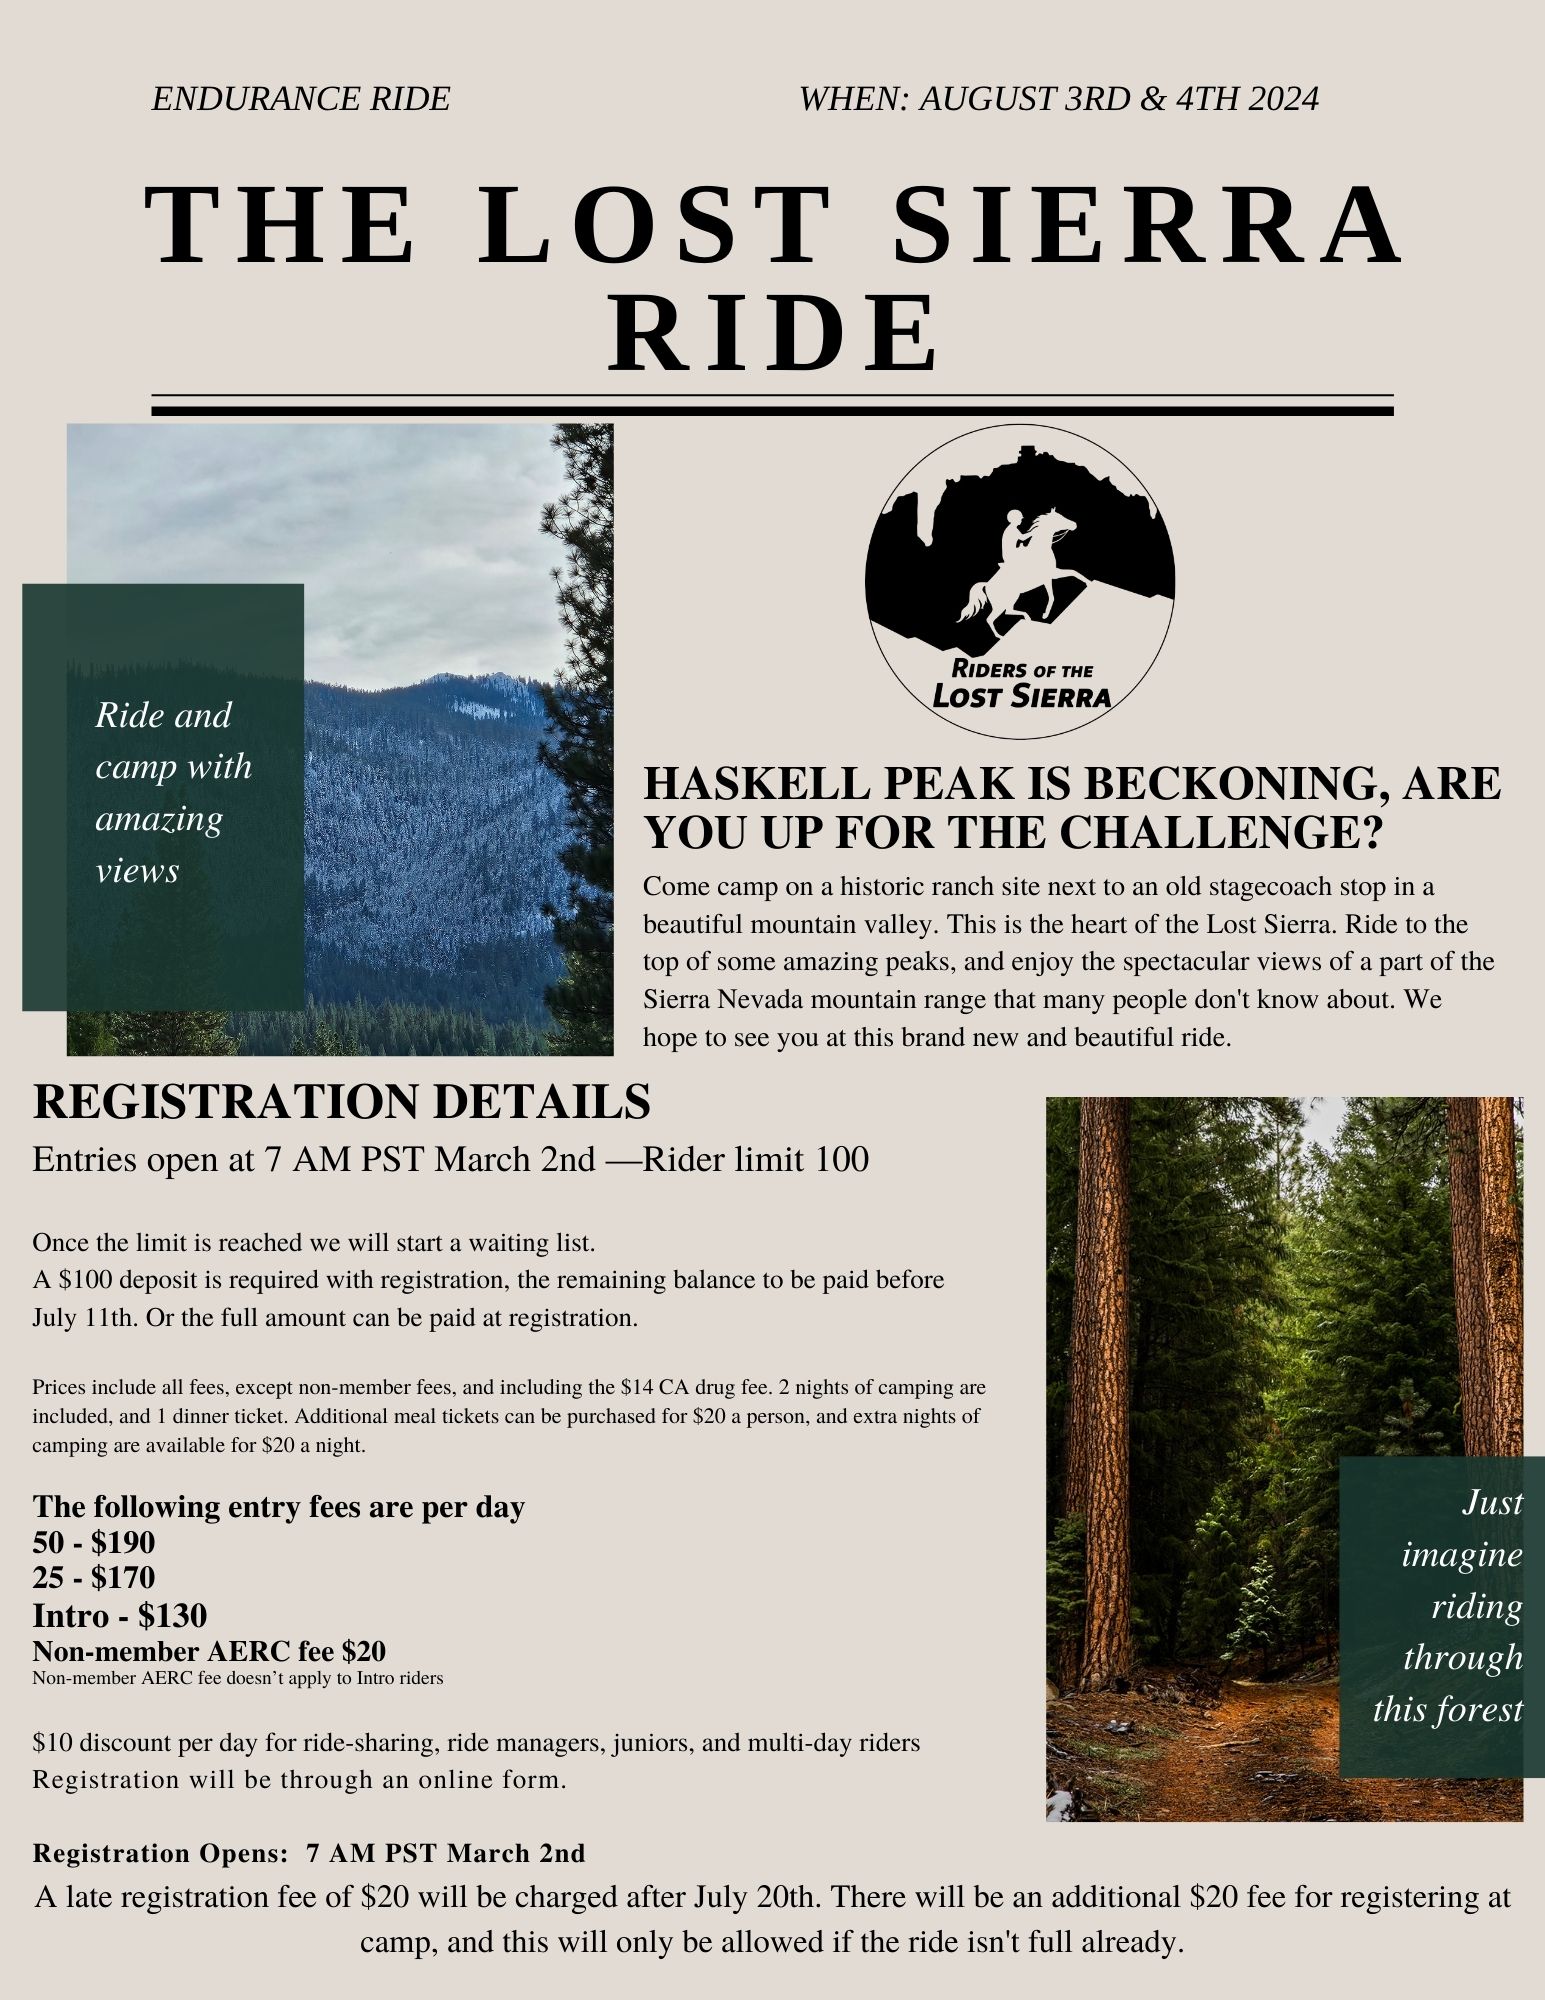 The Lost Sierra Ride Riders of The Lost Sierra